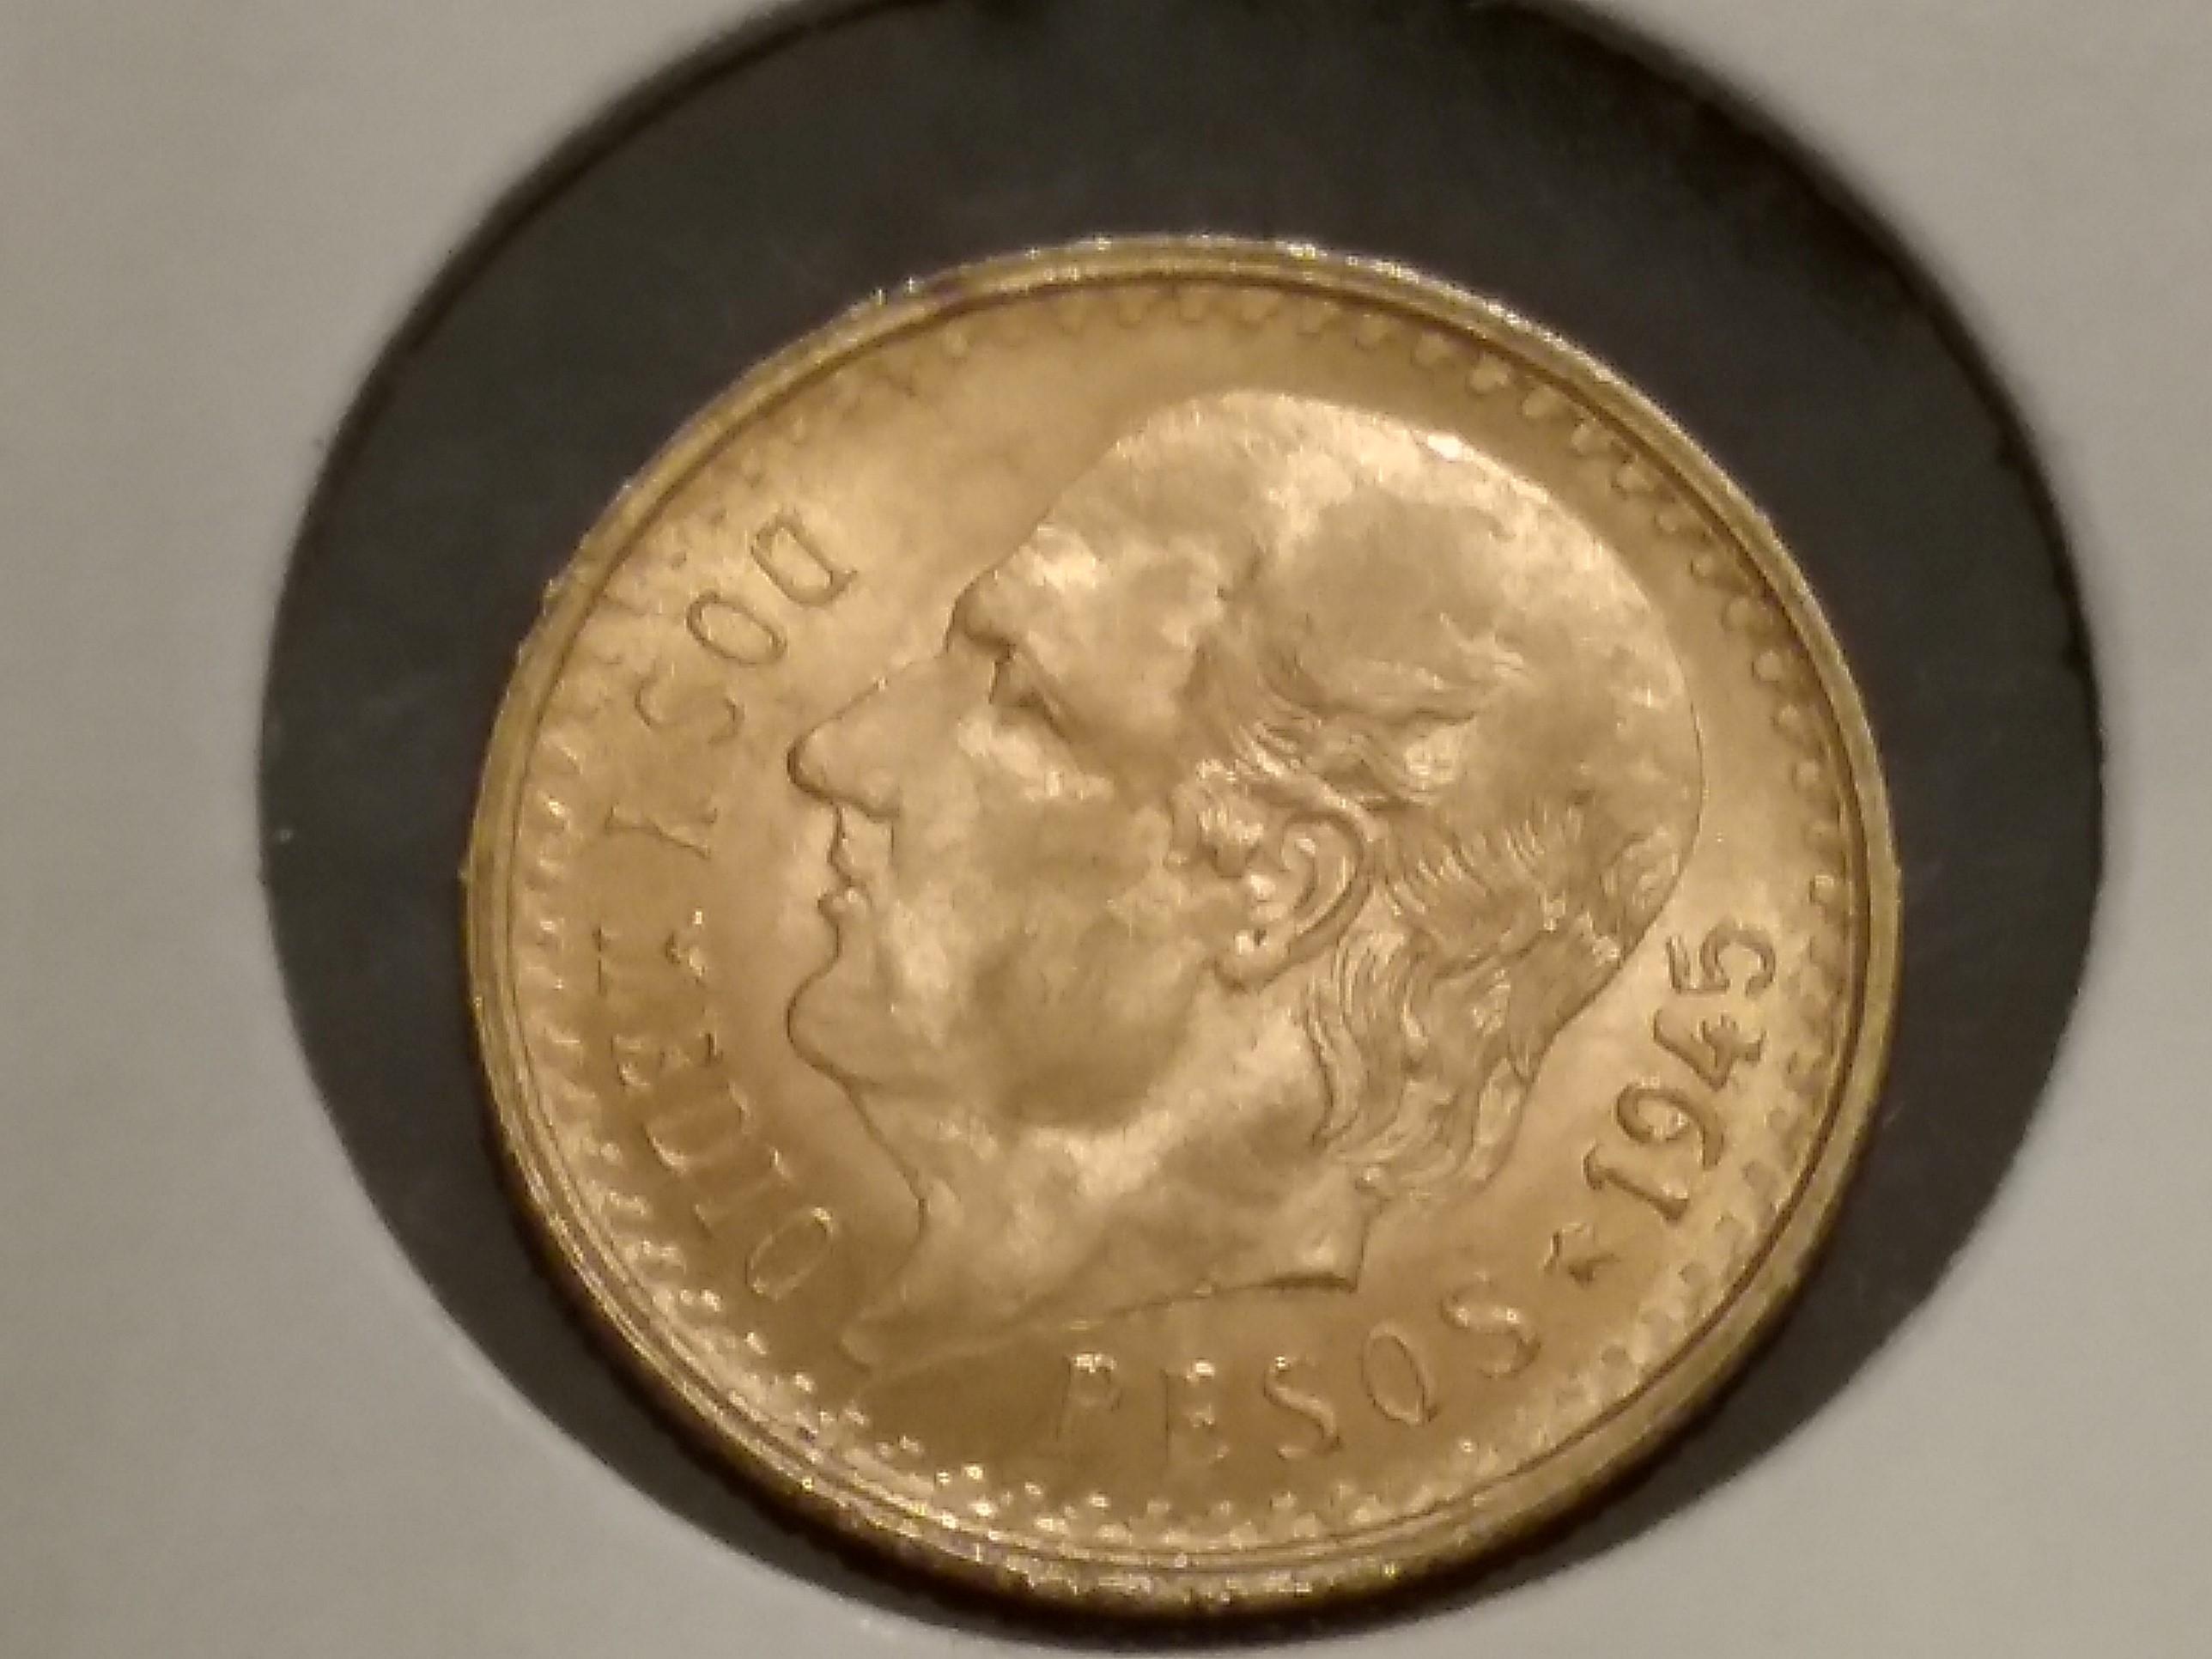 GOLD Mexico 1945 2 1/2 pesos Brilliant Uncirculated